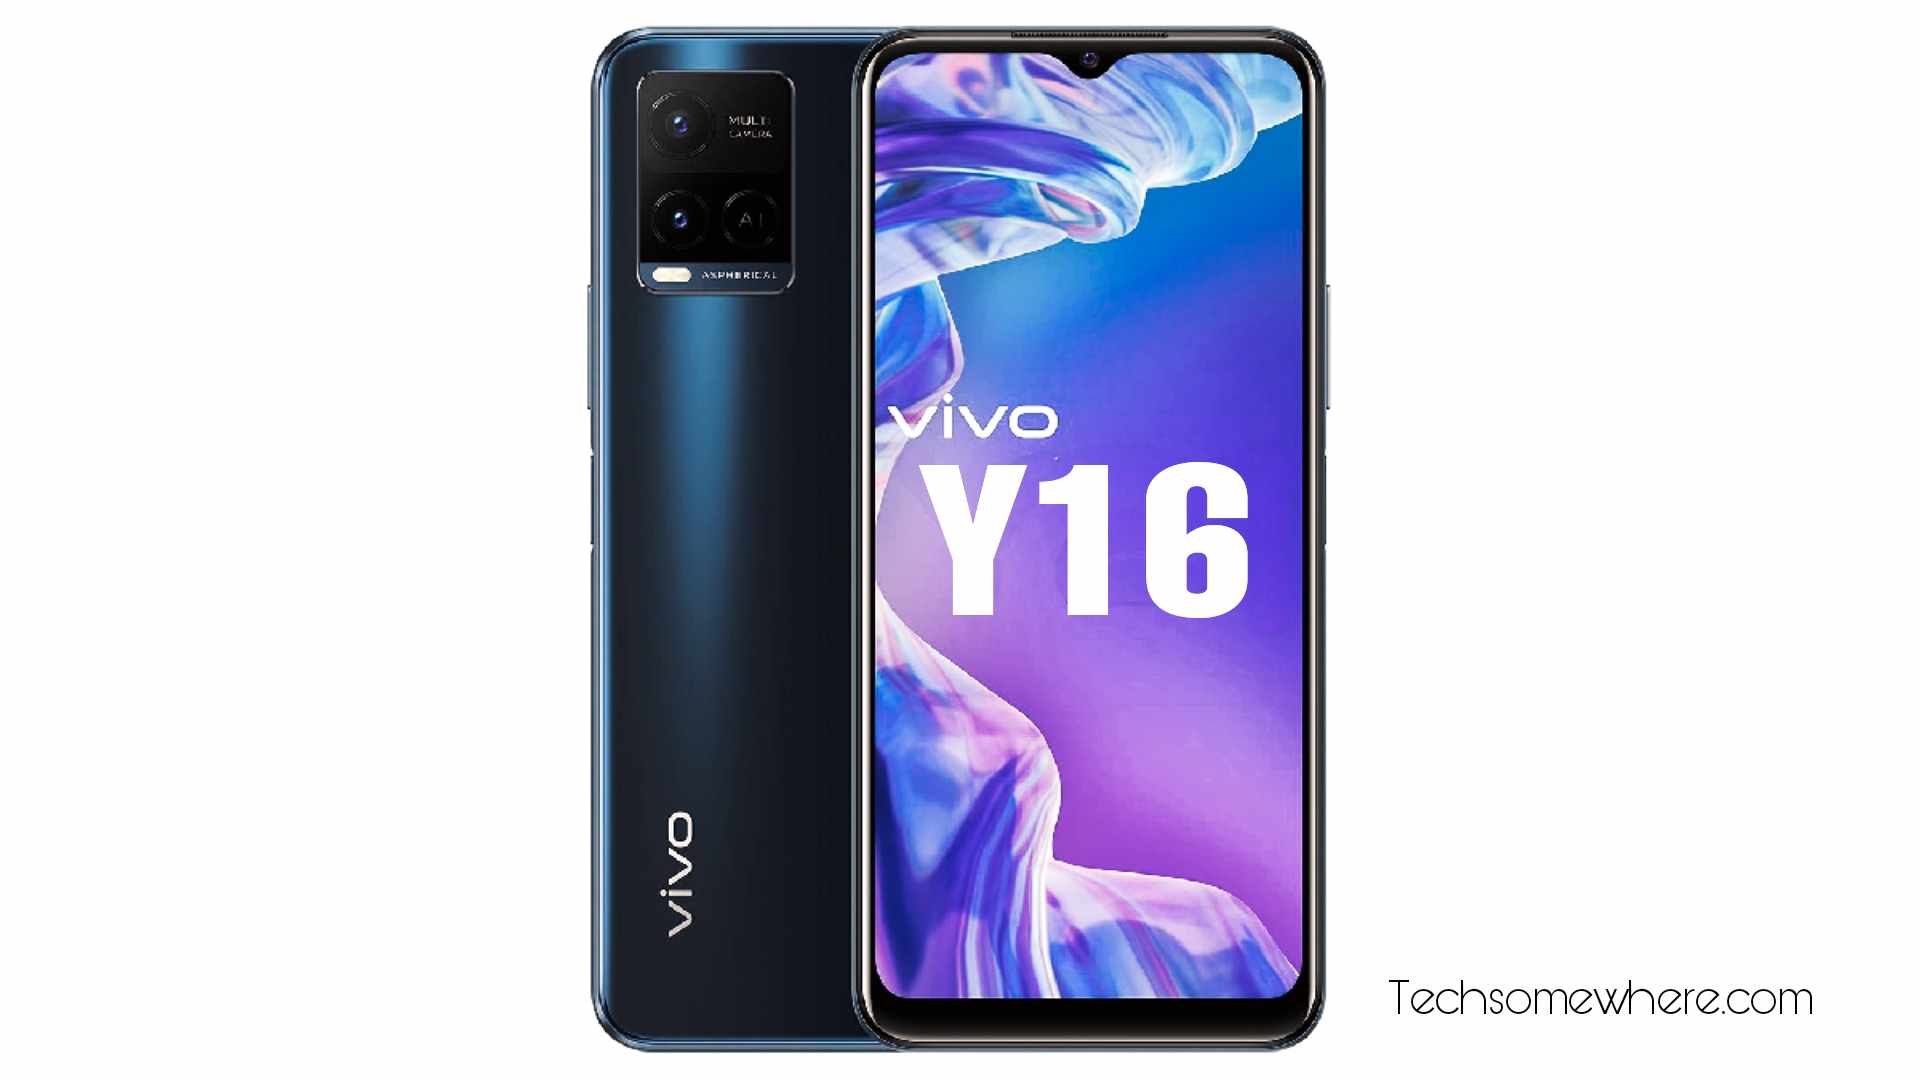 Vivo Y16 - Smartphone Interesting Features, Price & Release Date!